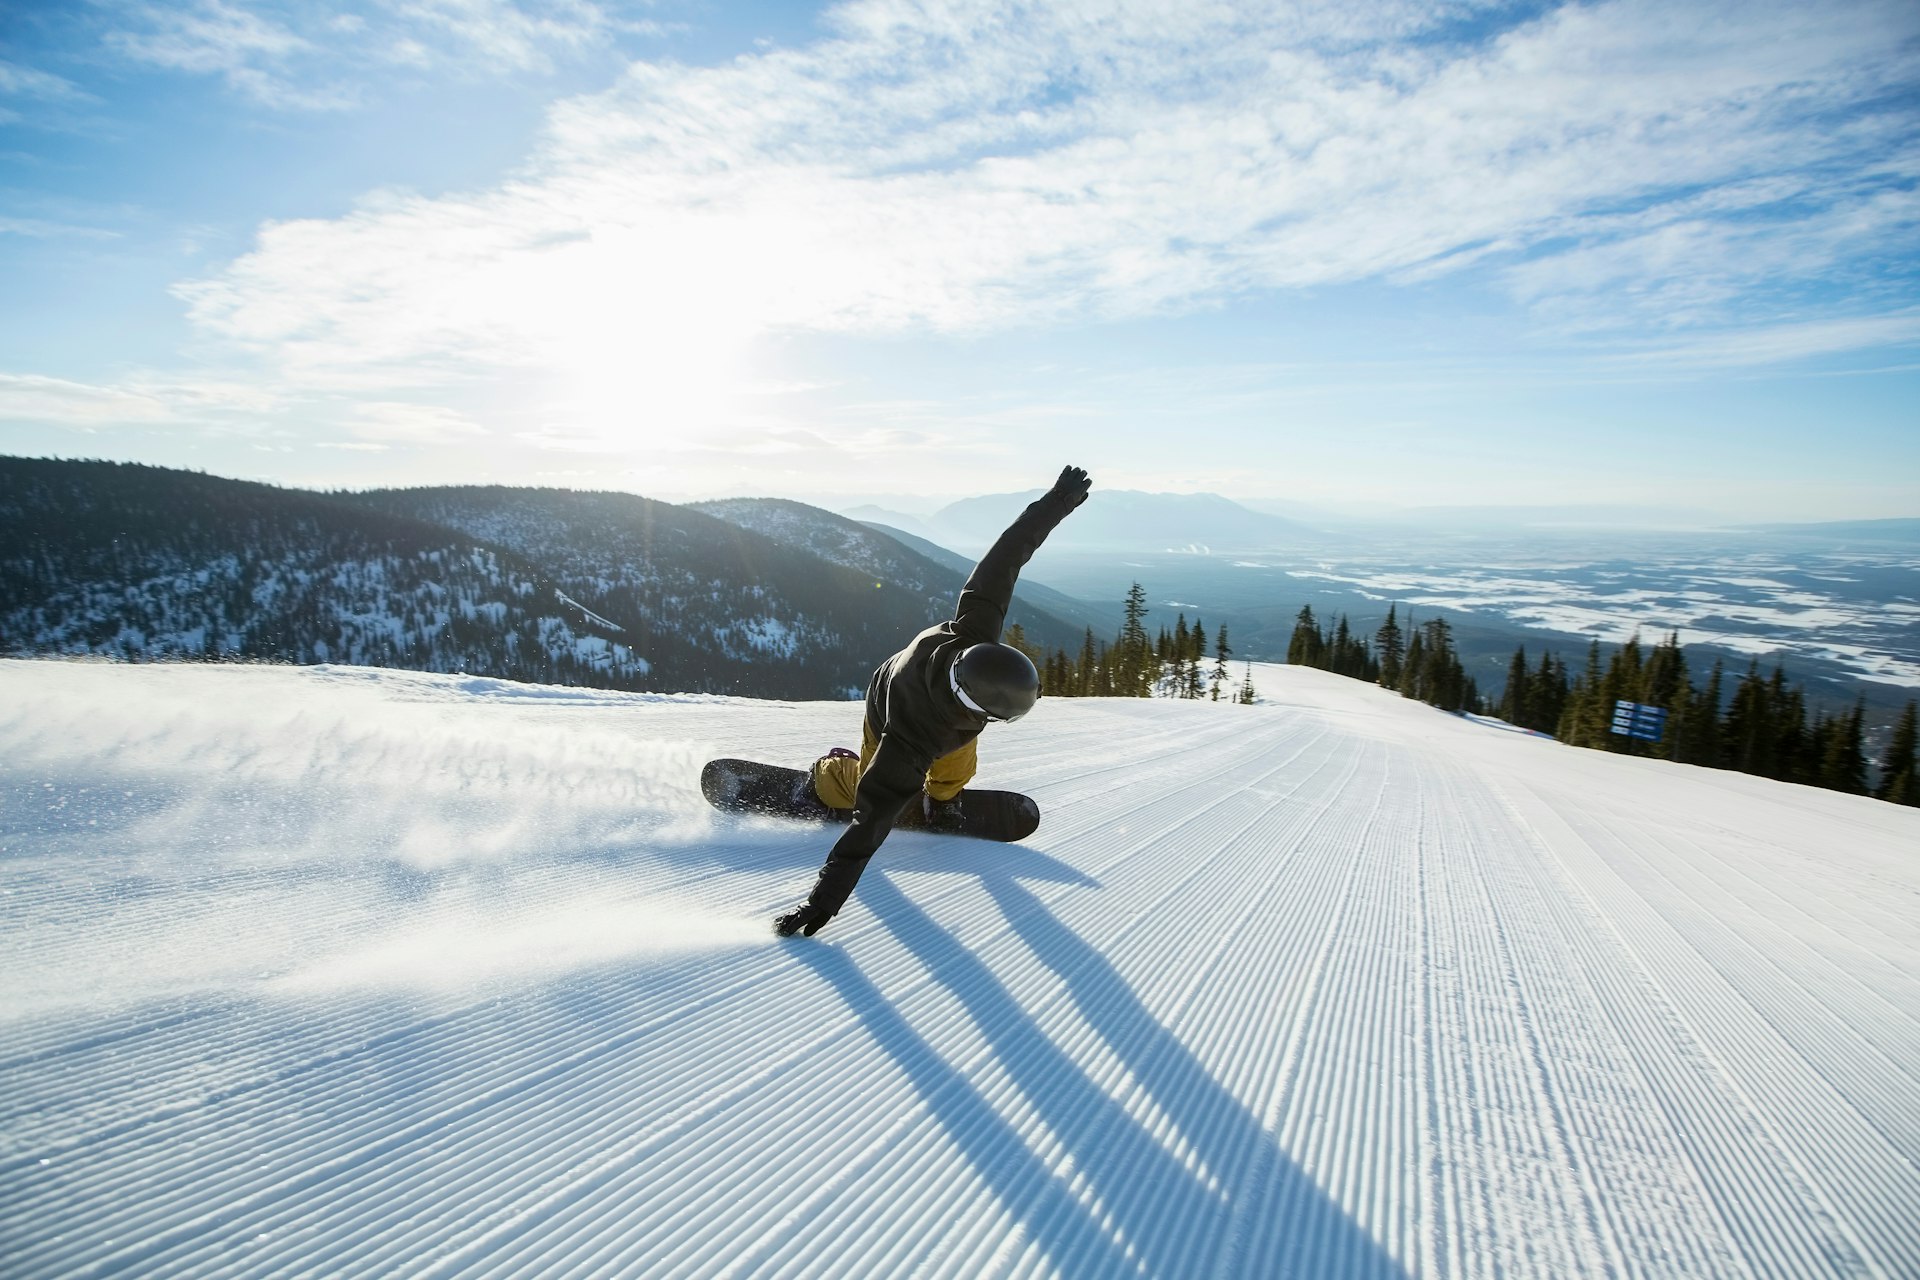 Snowboarder on an empty Montana ski slope